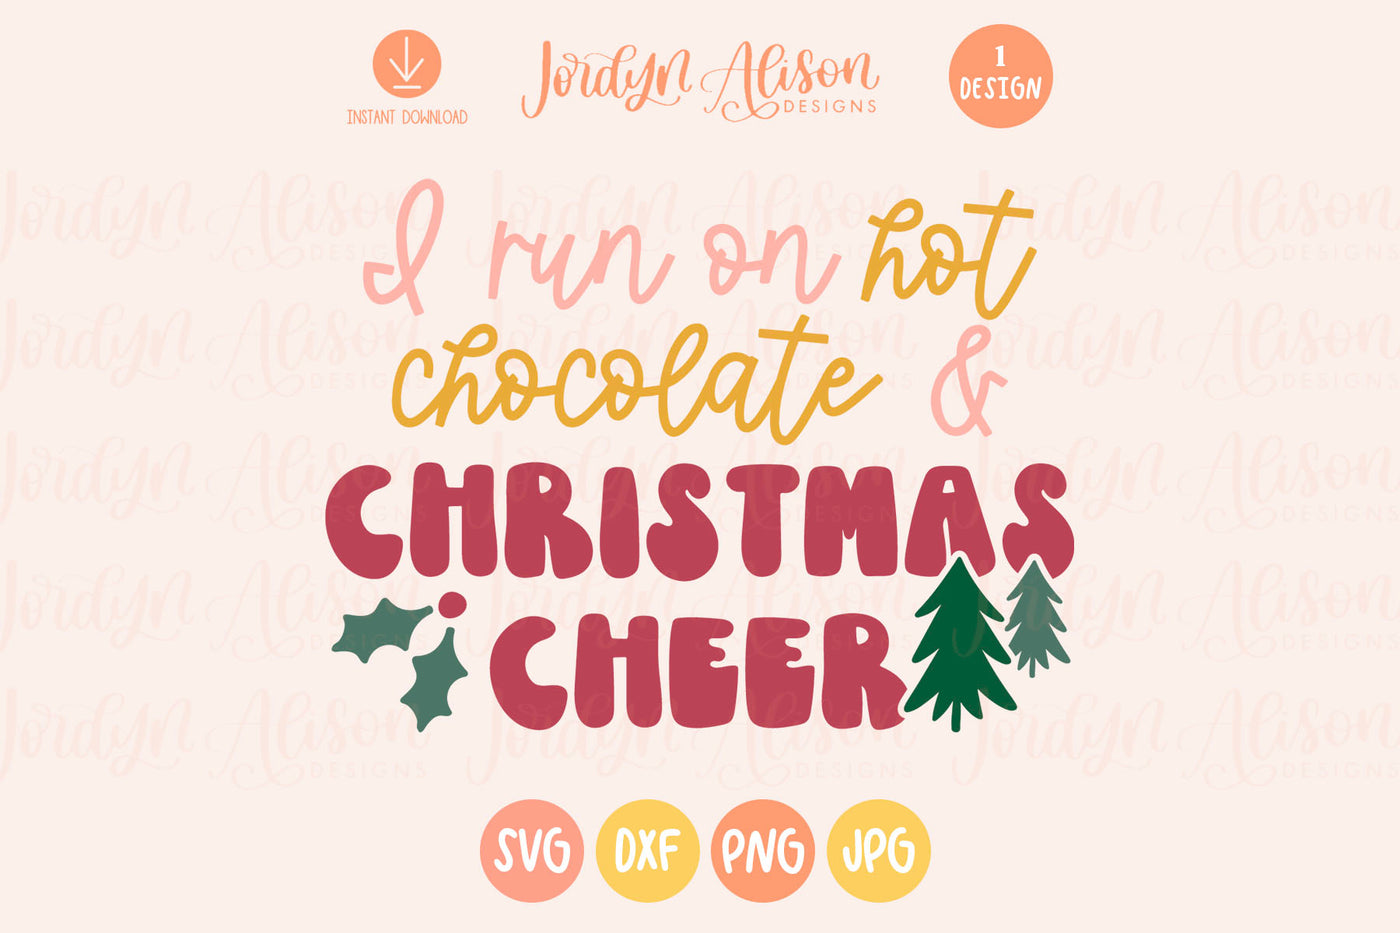 Hot Chocolate and Christmas Cheer SVG